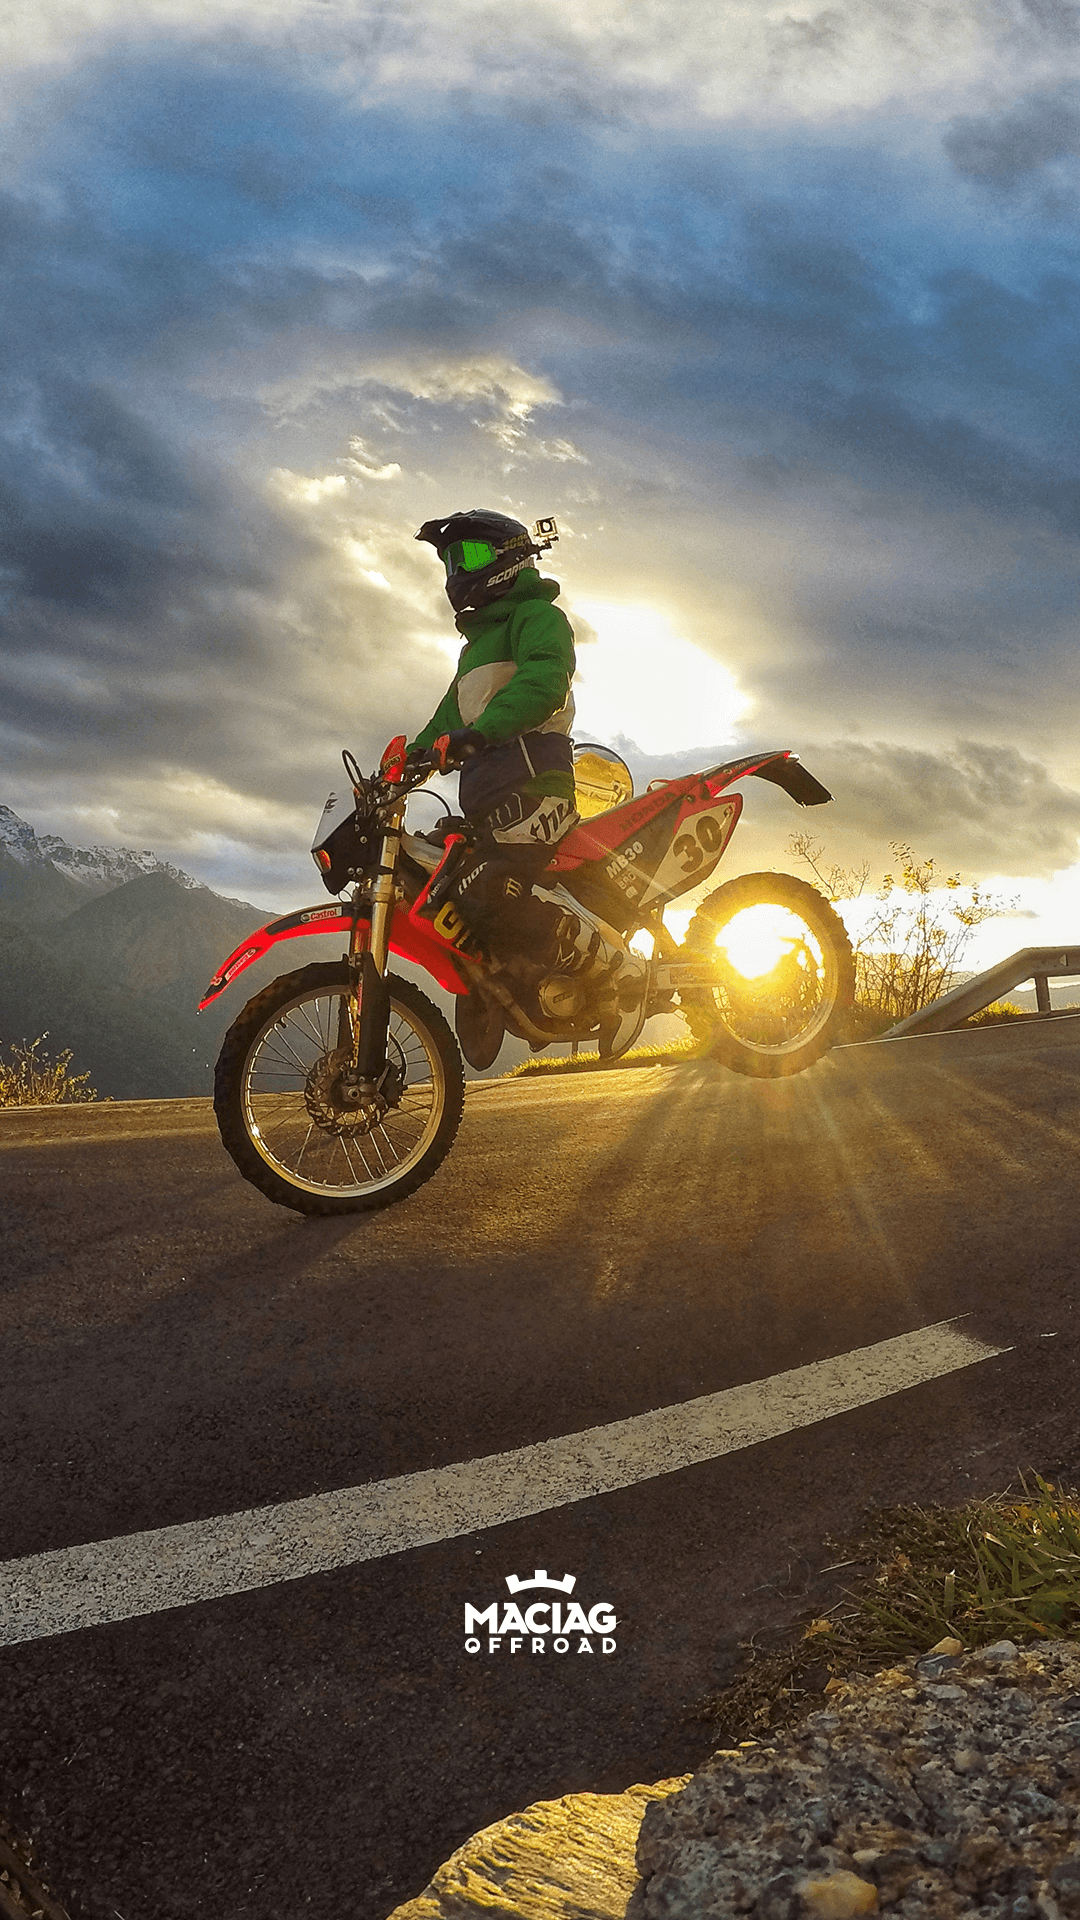 Fondo de Pantalla de Motocross y Mountainbike Gratis | Maciag Offroad